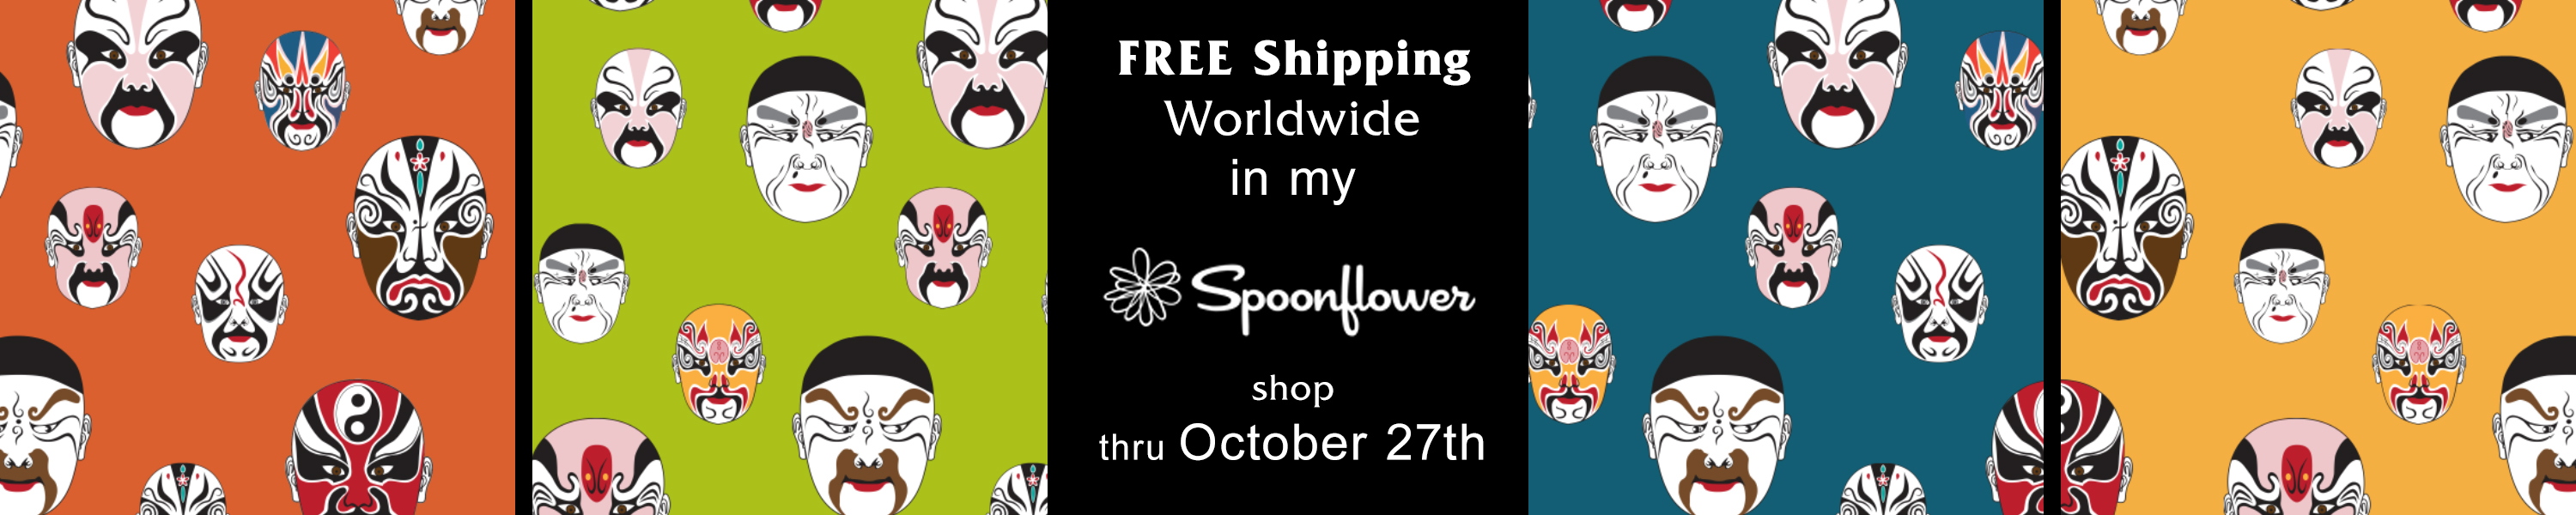 spoonflower_free_ship_masks_wrdprss